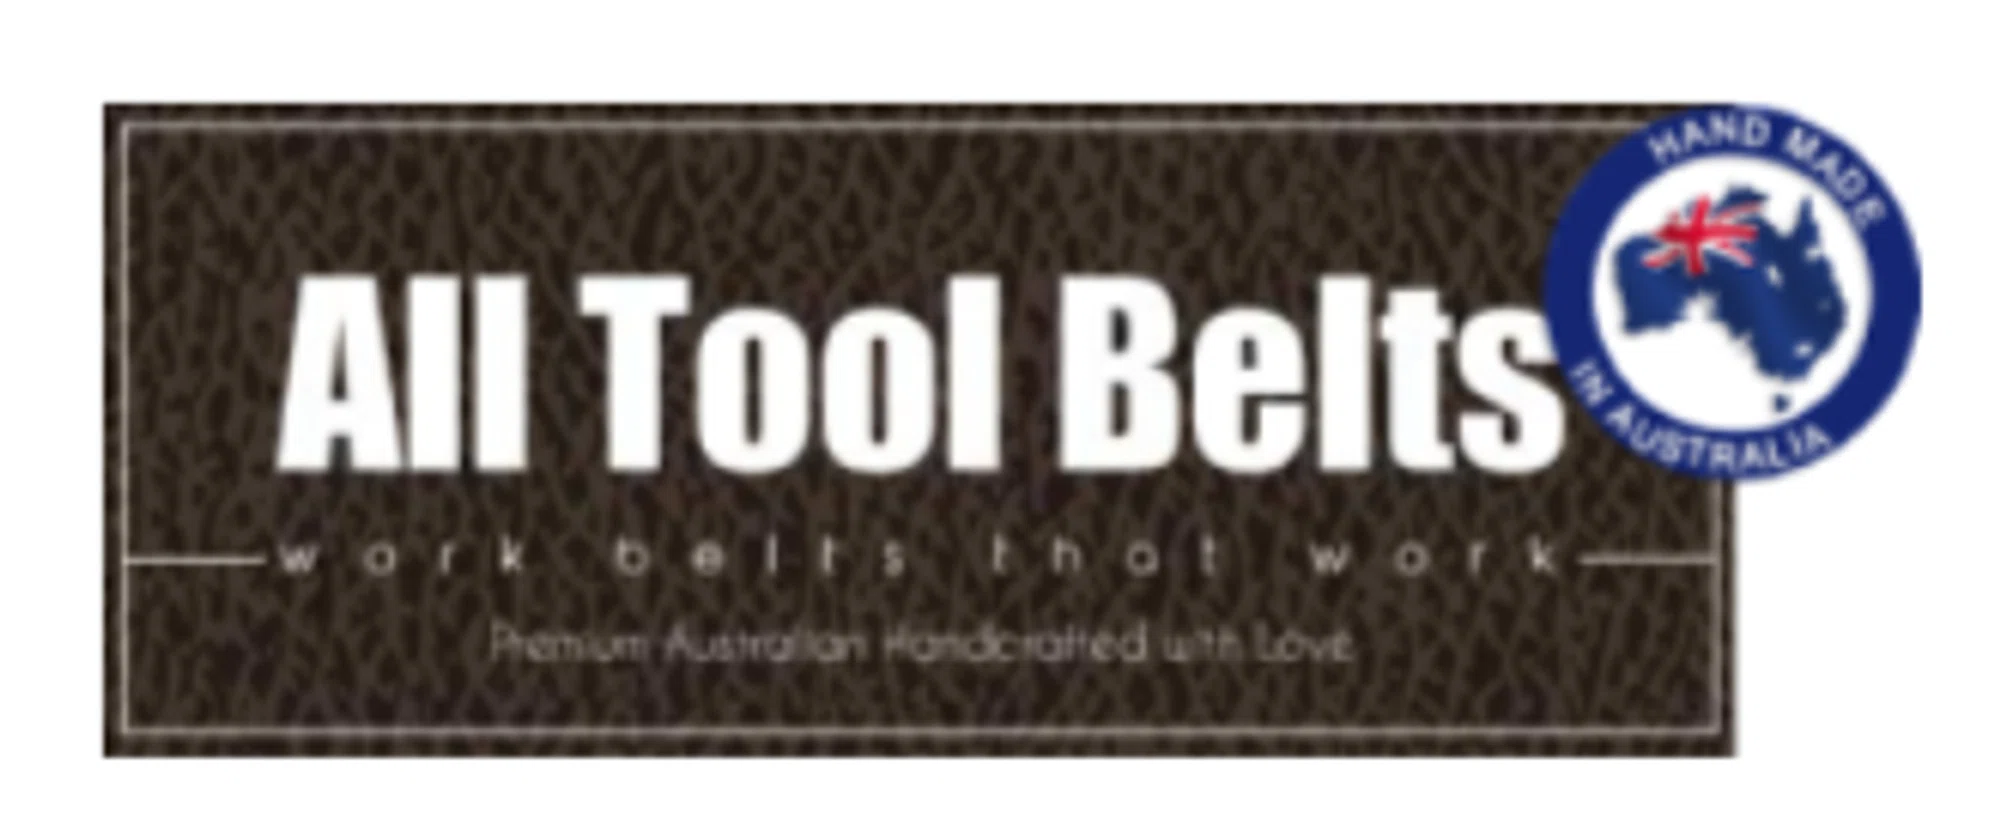 All Tool Belts